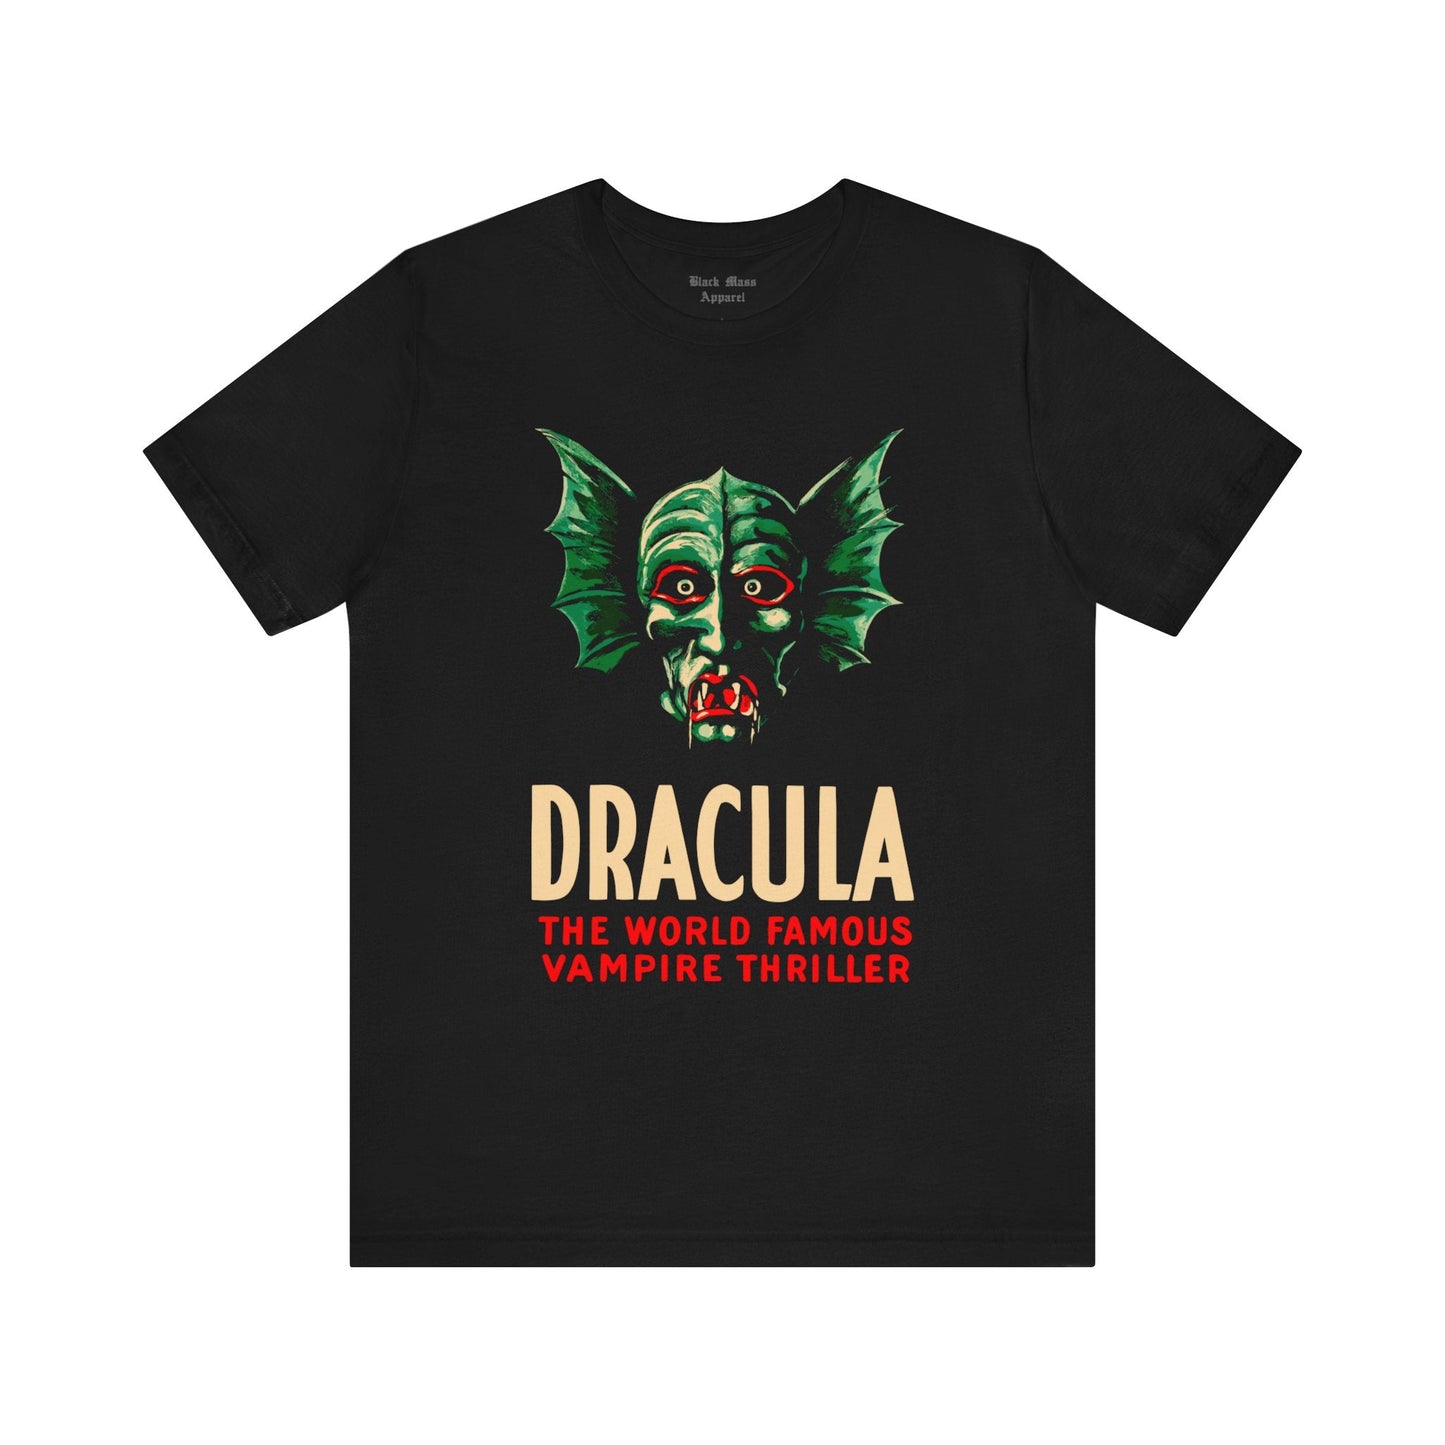 Dracula - Black Mass Apparel - T-Shirt